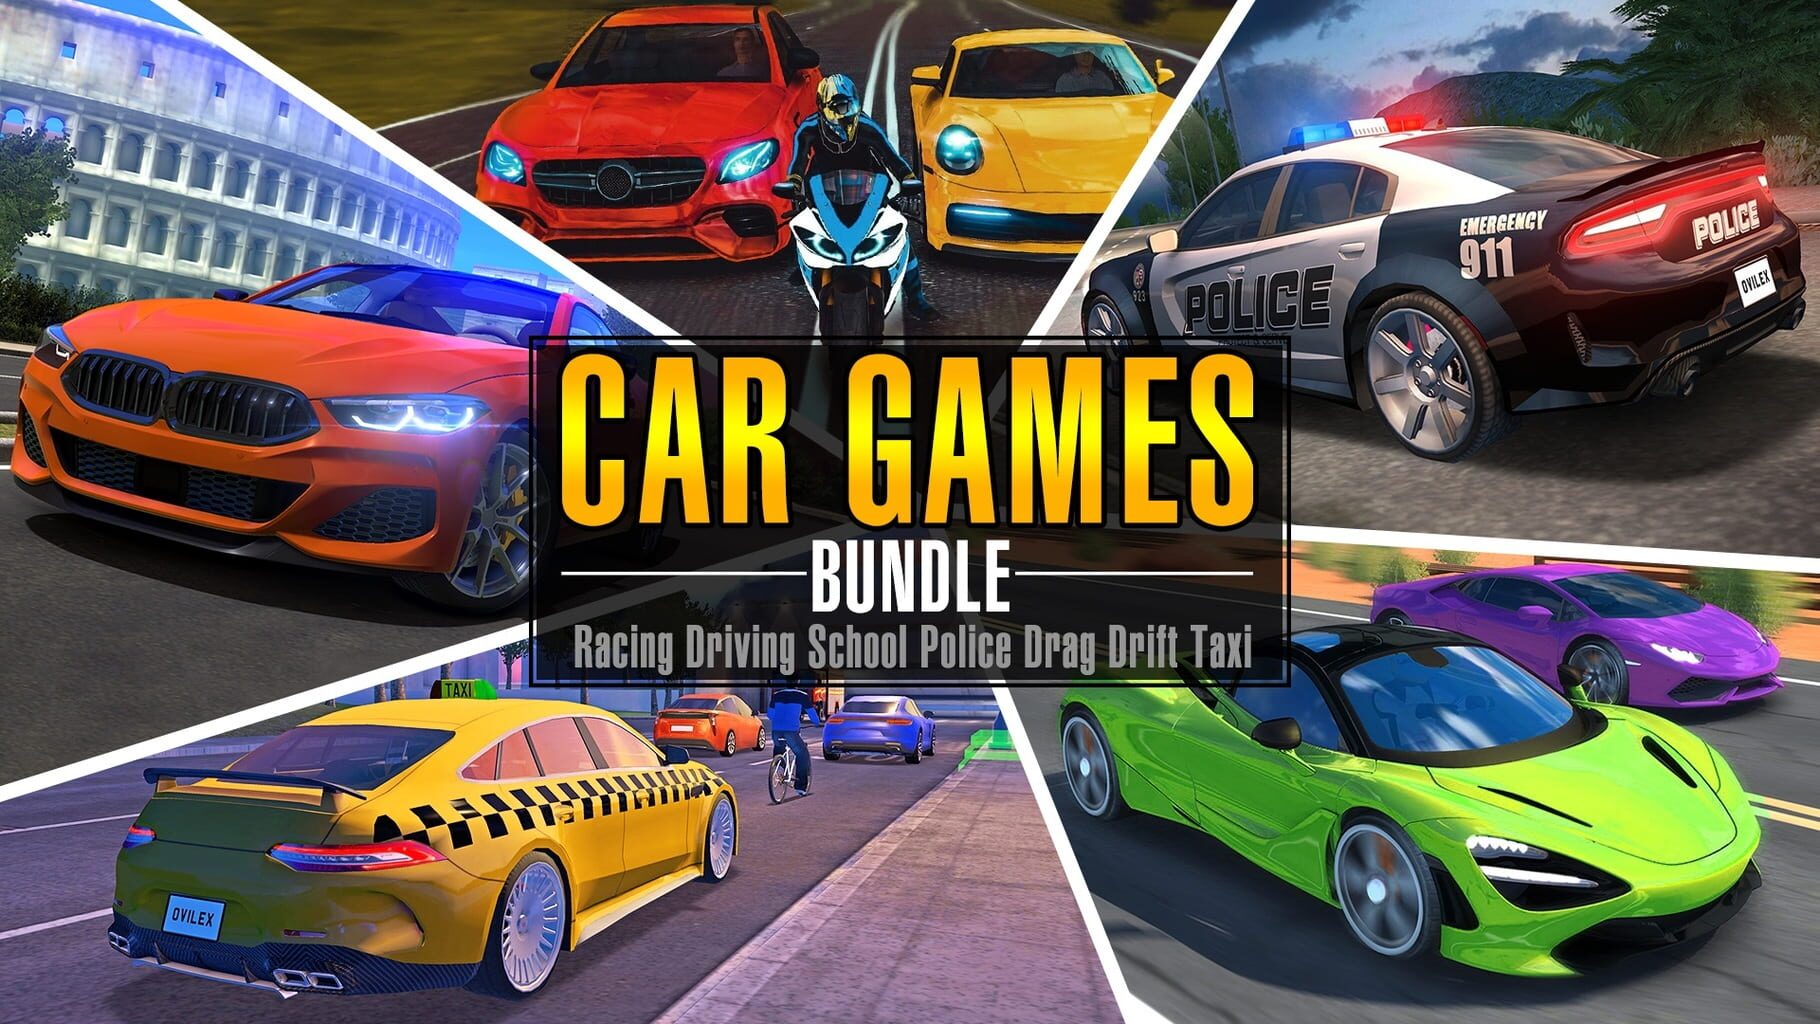 Car Games Bundle: Racing Driving School Police Drag Drift Taxi artwork